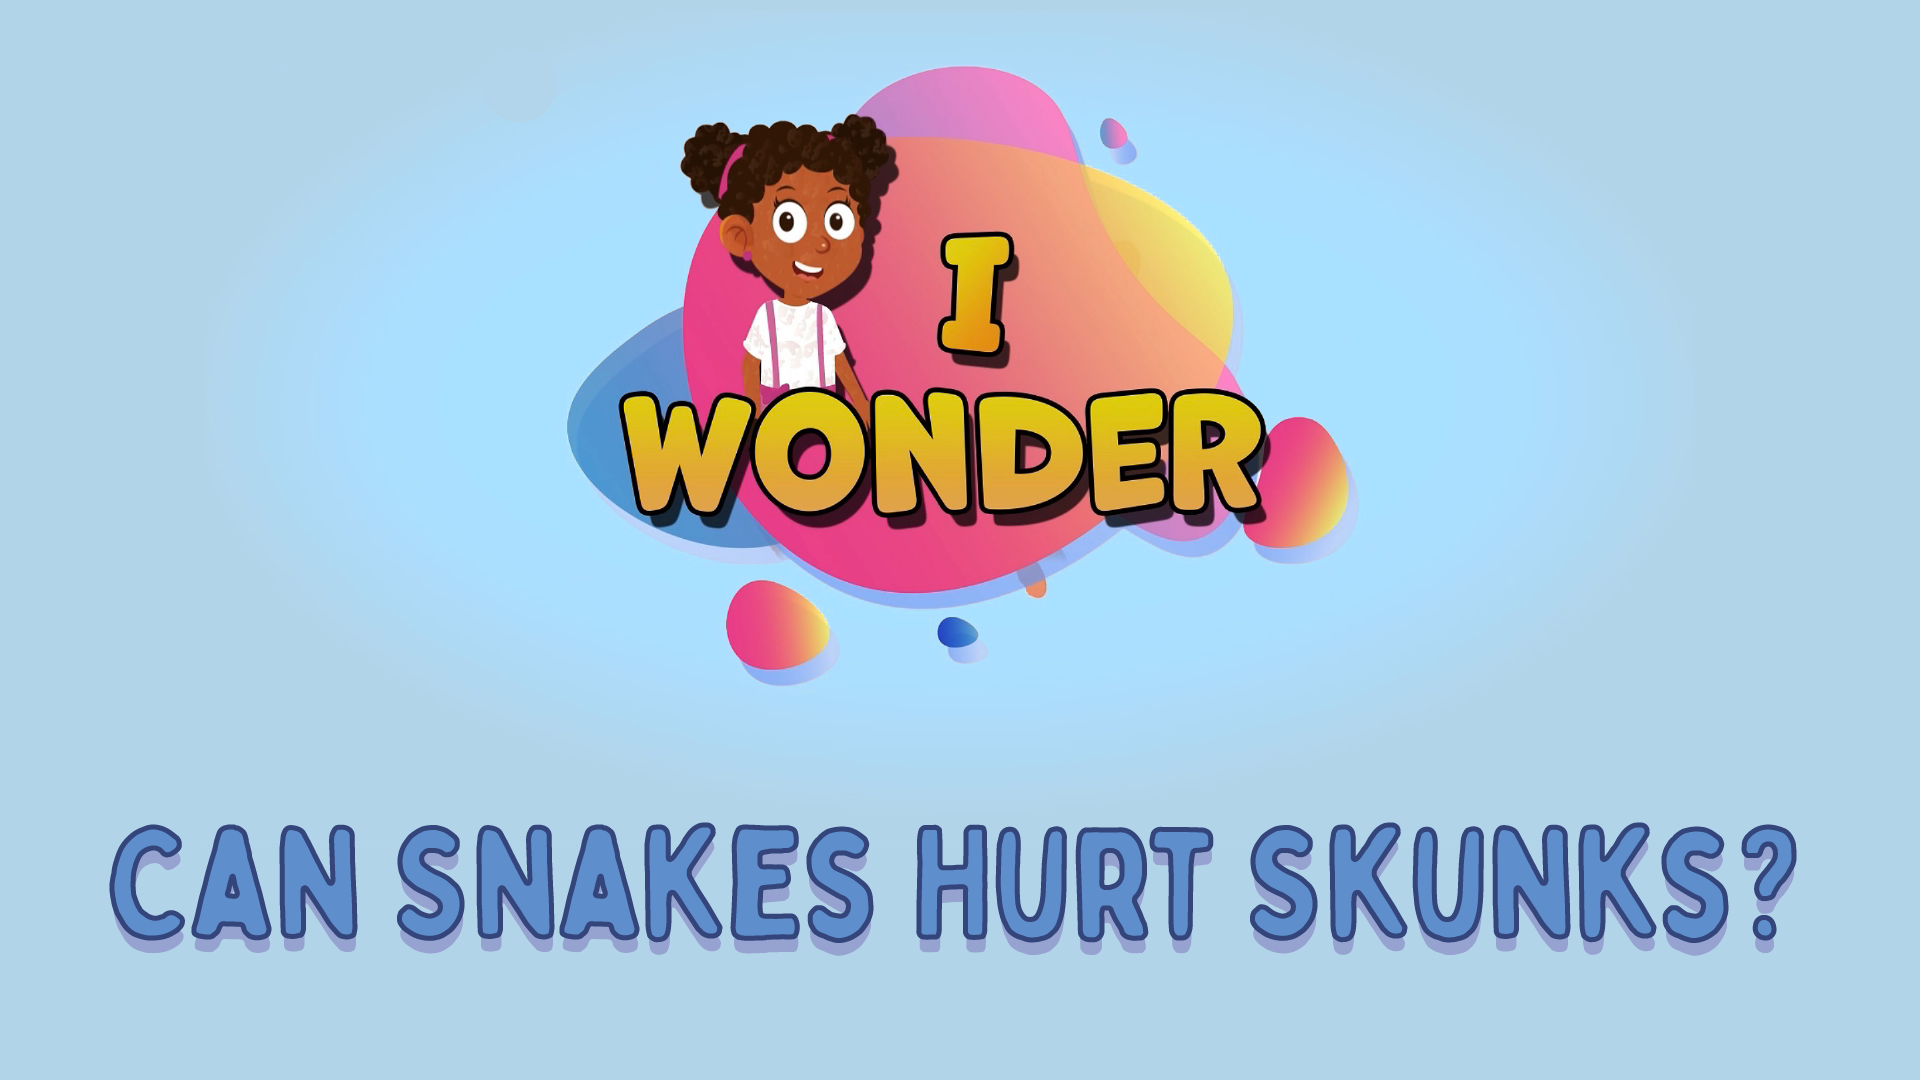 Can Snakes Hurt Skunks?